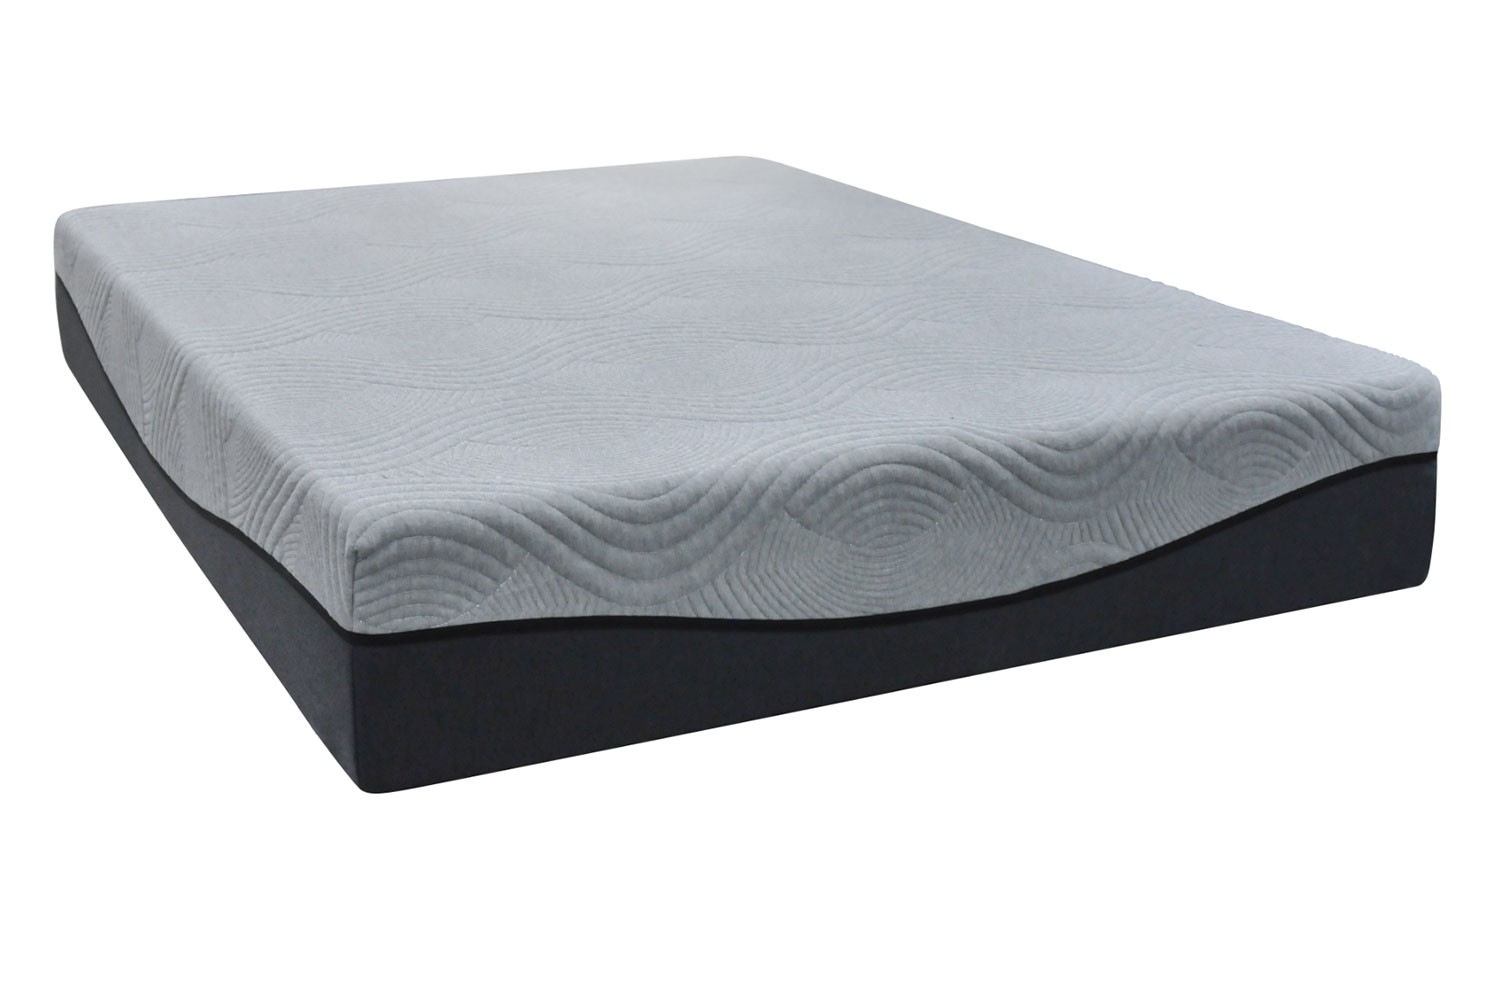 10-inch lift inner spring splendor futon mattress